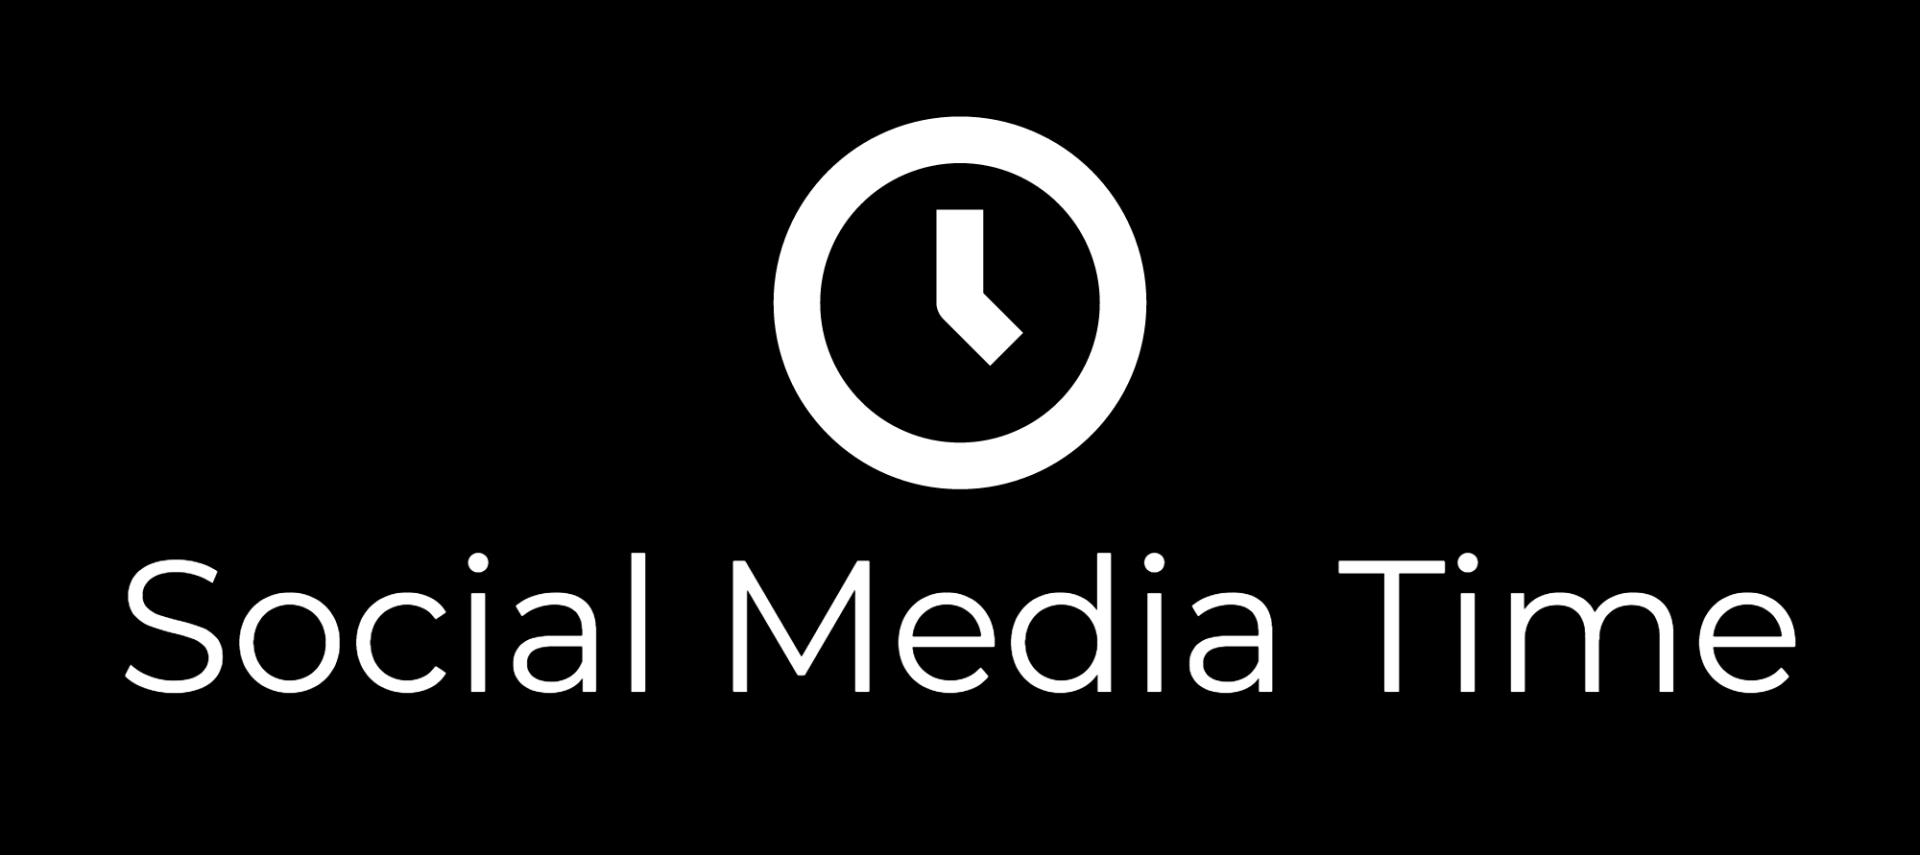 SocialMediaTime-logo-white1.png